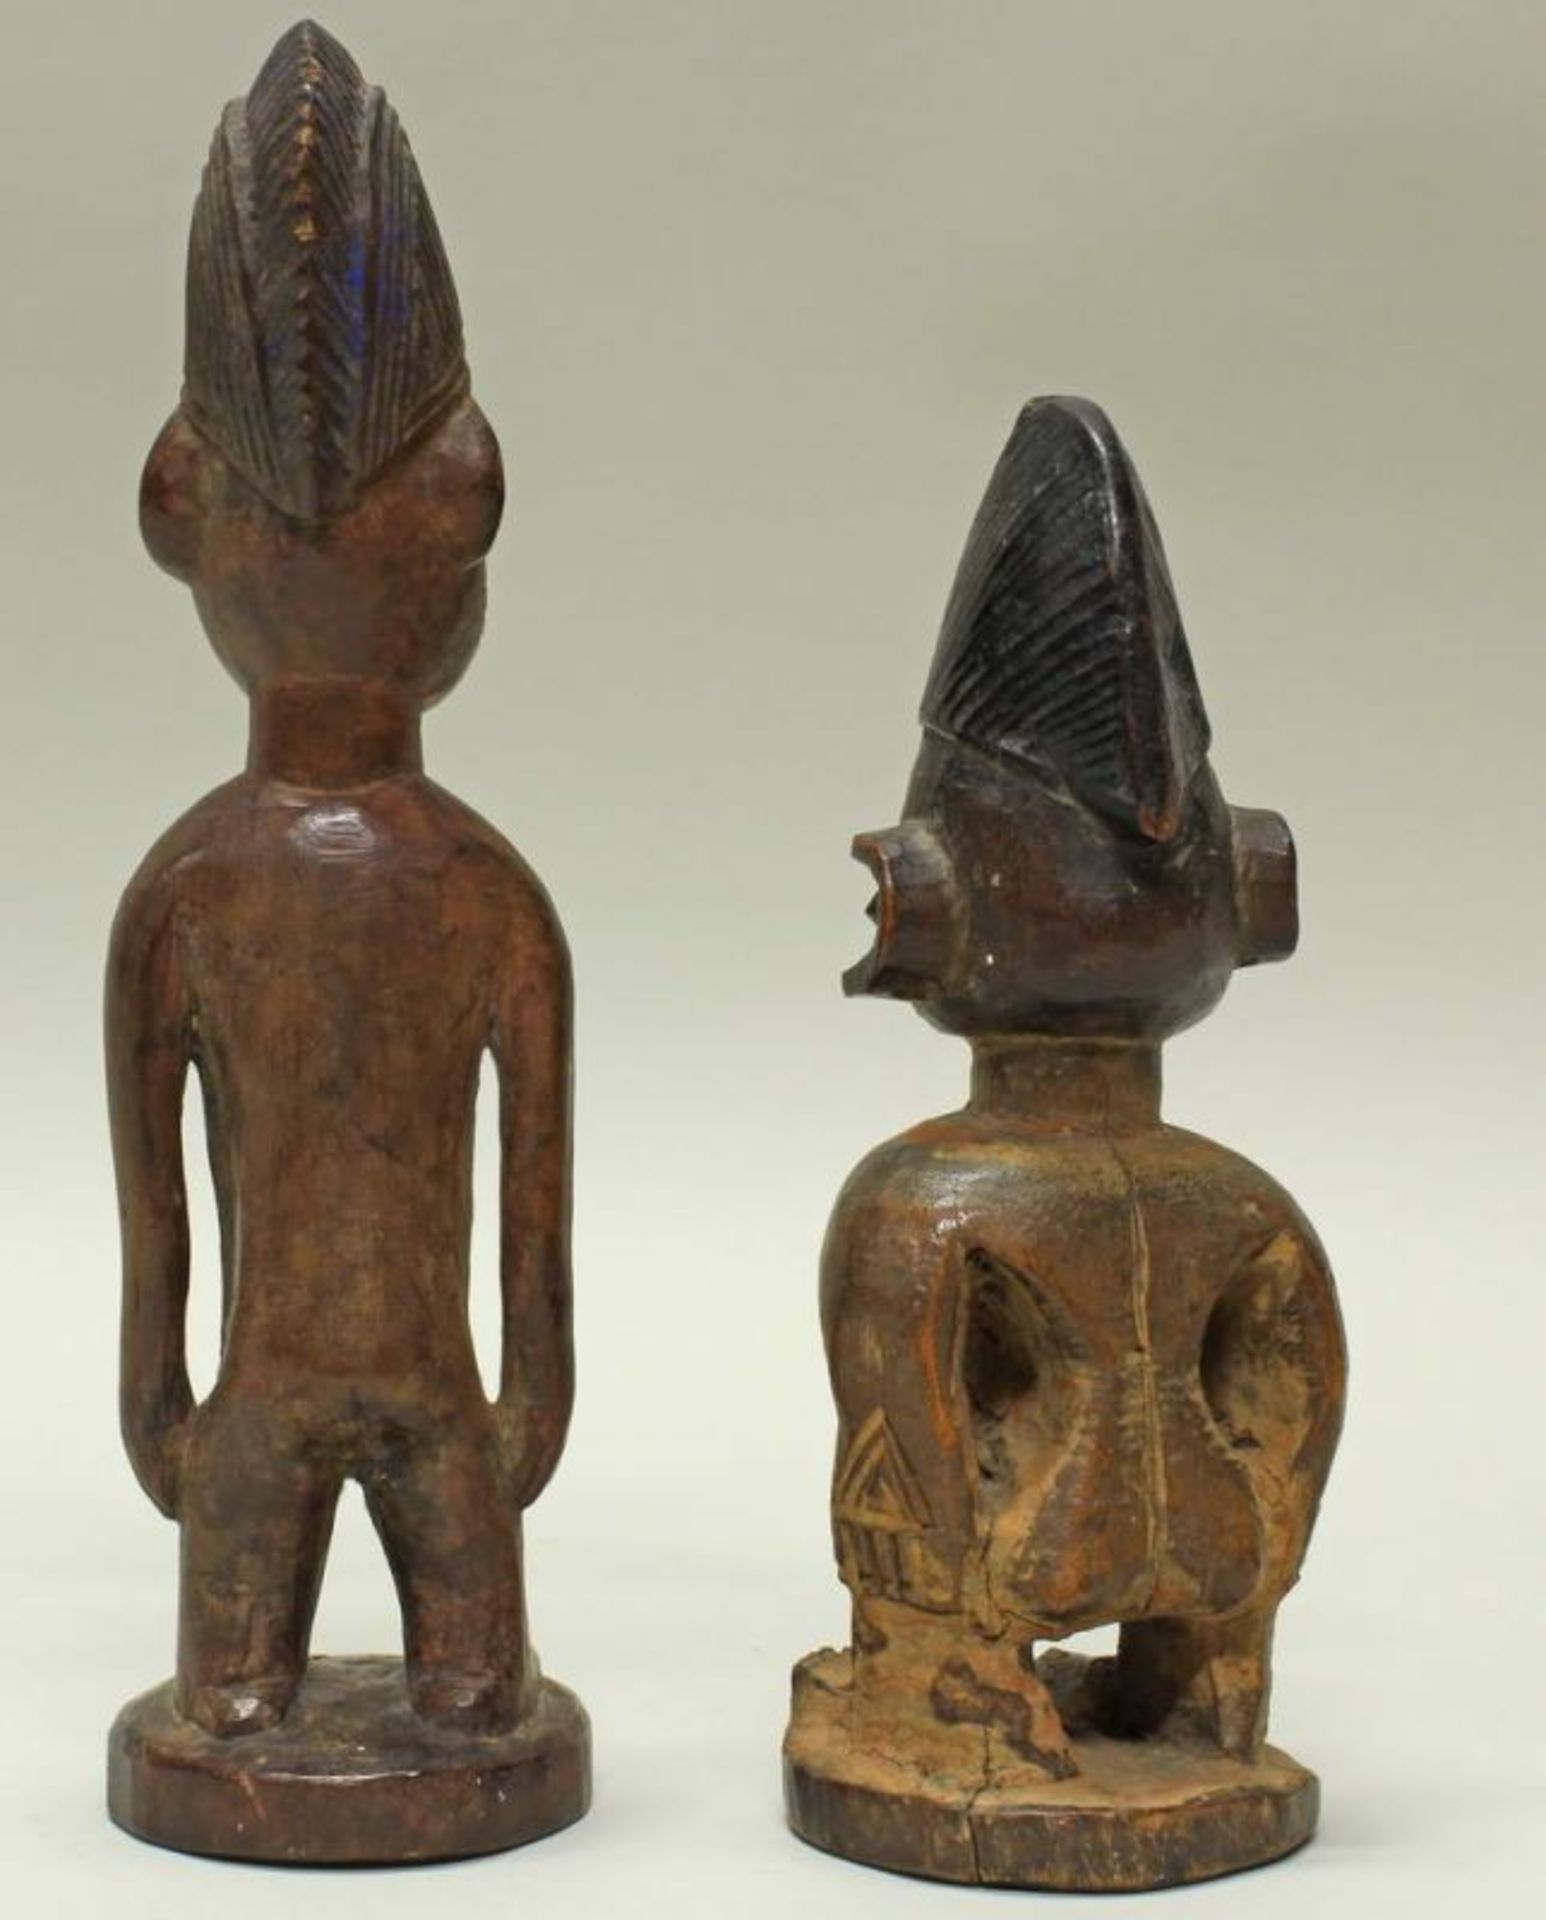 2 Figuren, Ibedji, Yoruba, Nigeria, Afrika, authentisch, Holz, patiniert, 23 cm bzw. 29 cm hoch. - Image 2 of 2